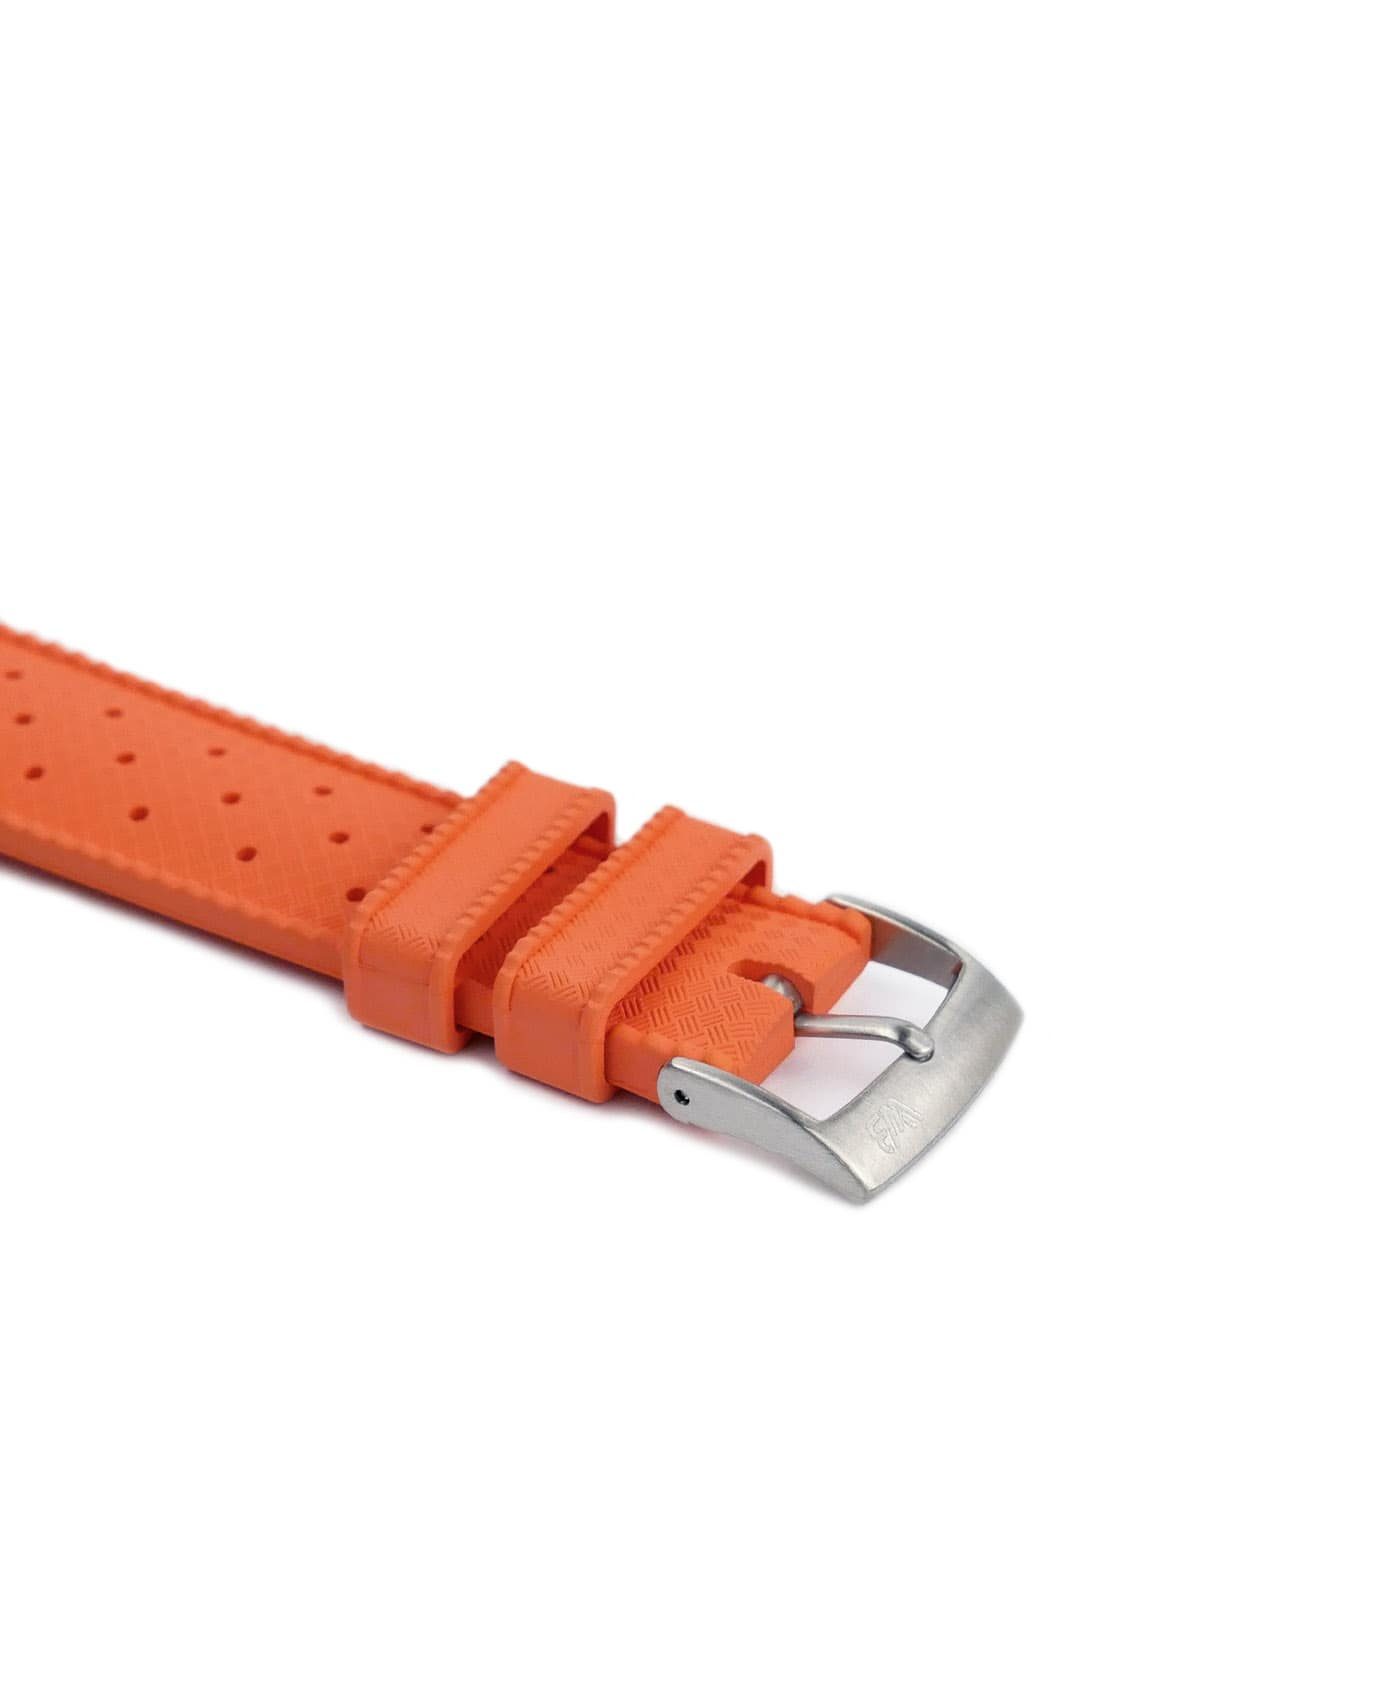 Tropical Rubber watch strap_Orange_Buckle